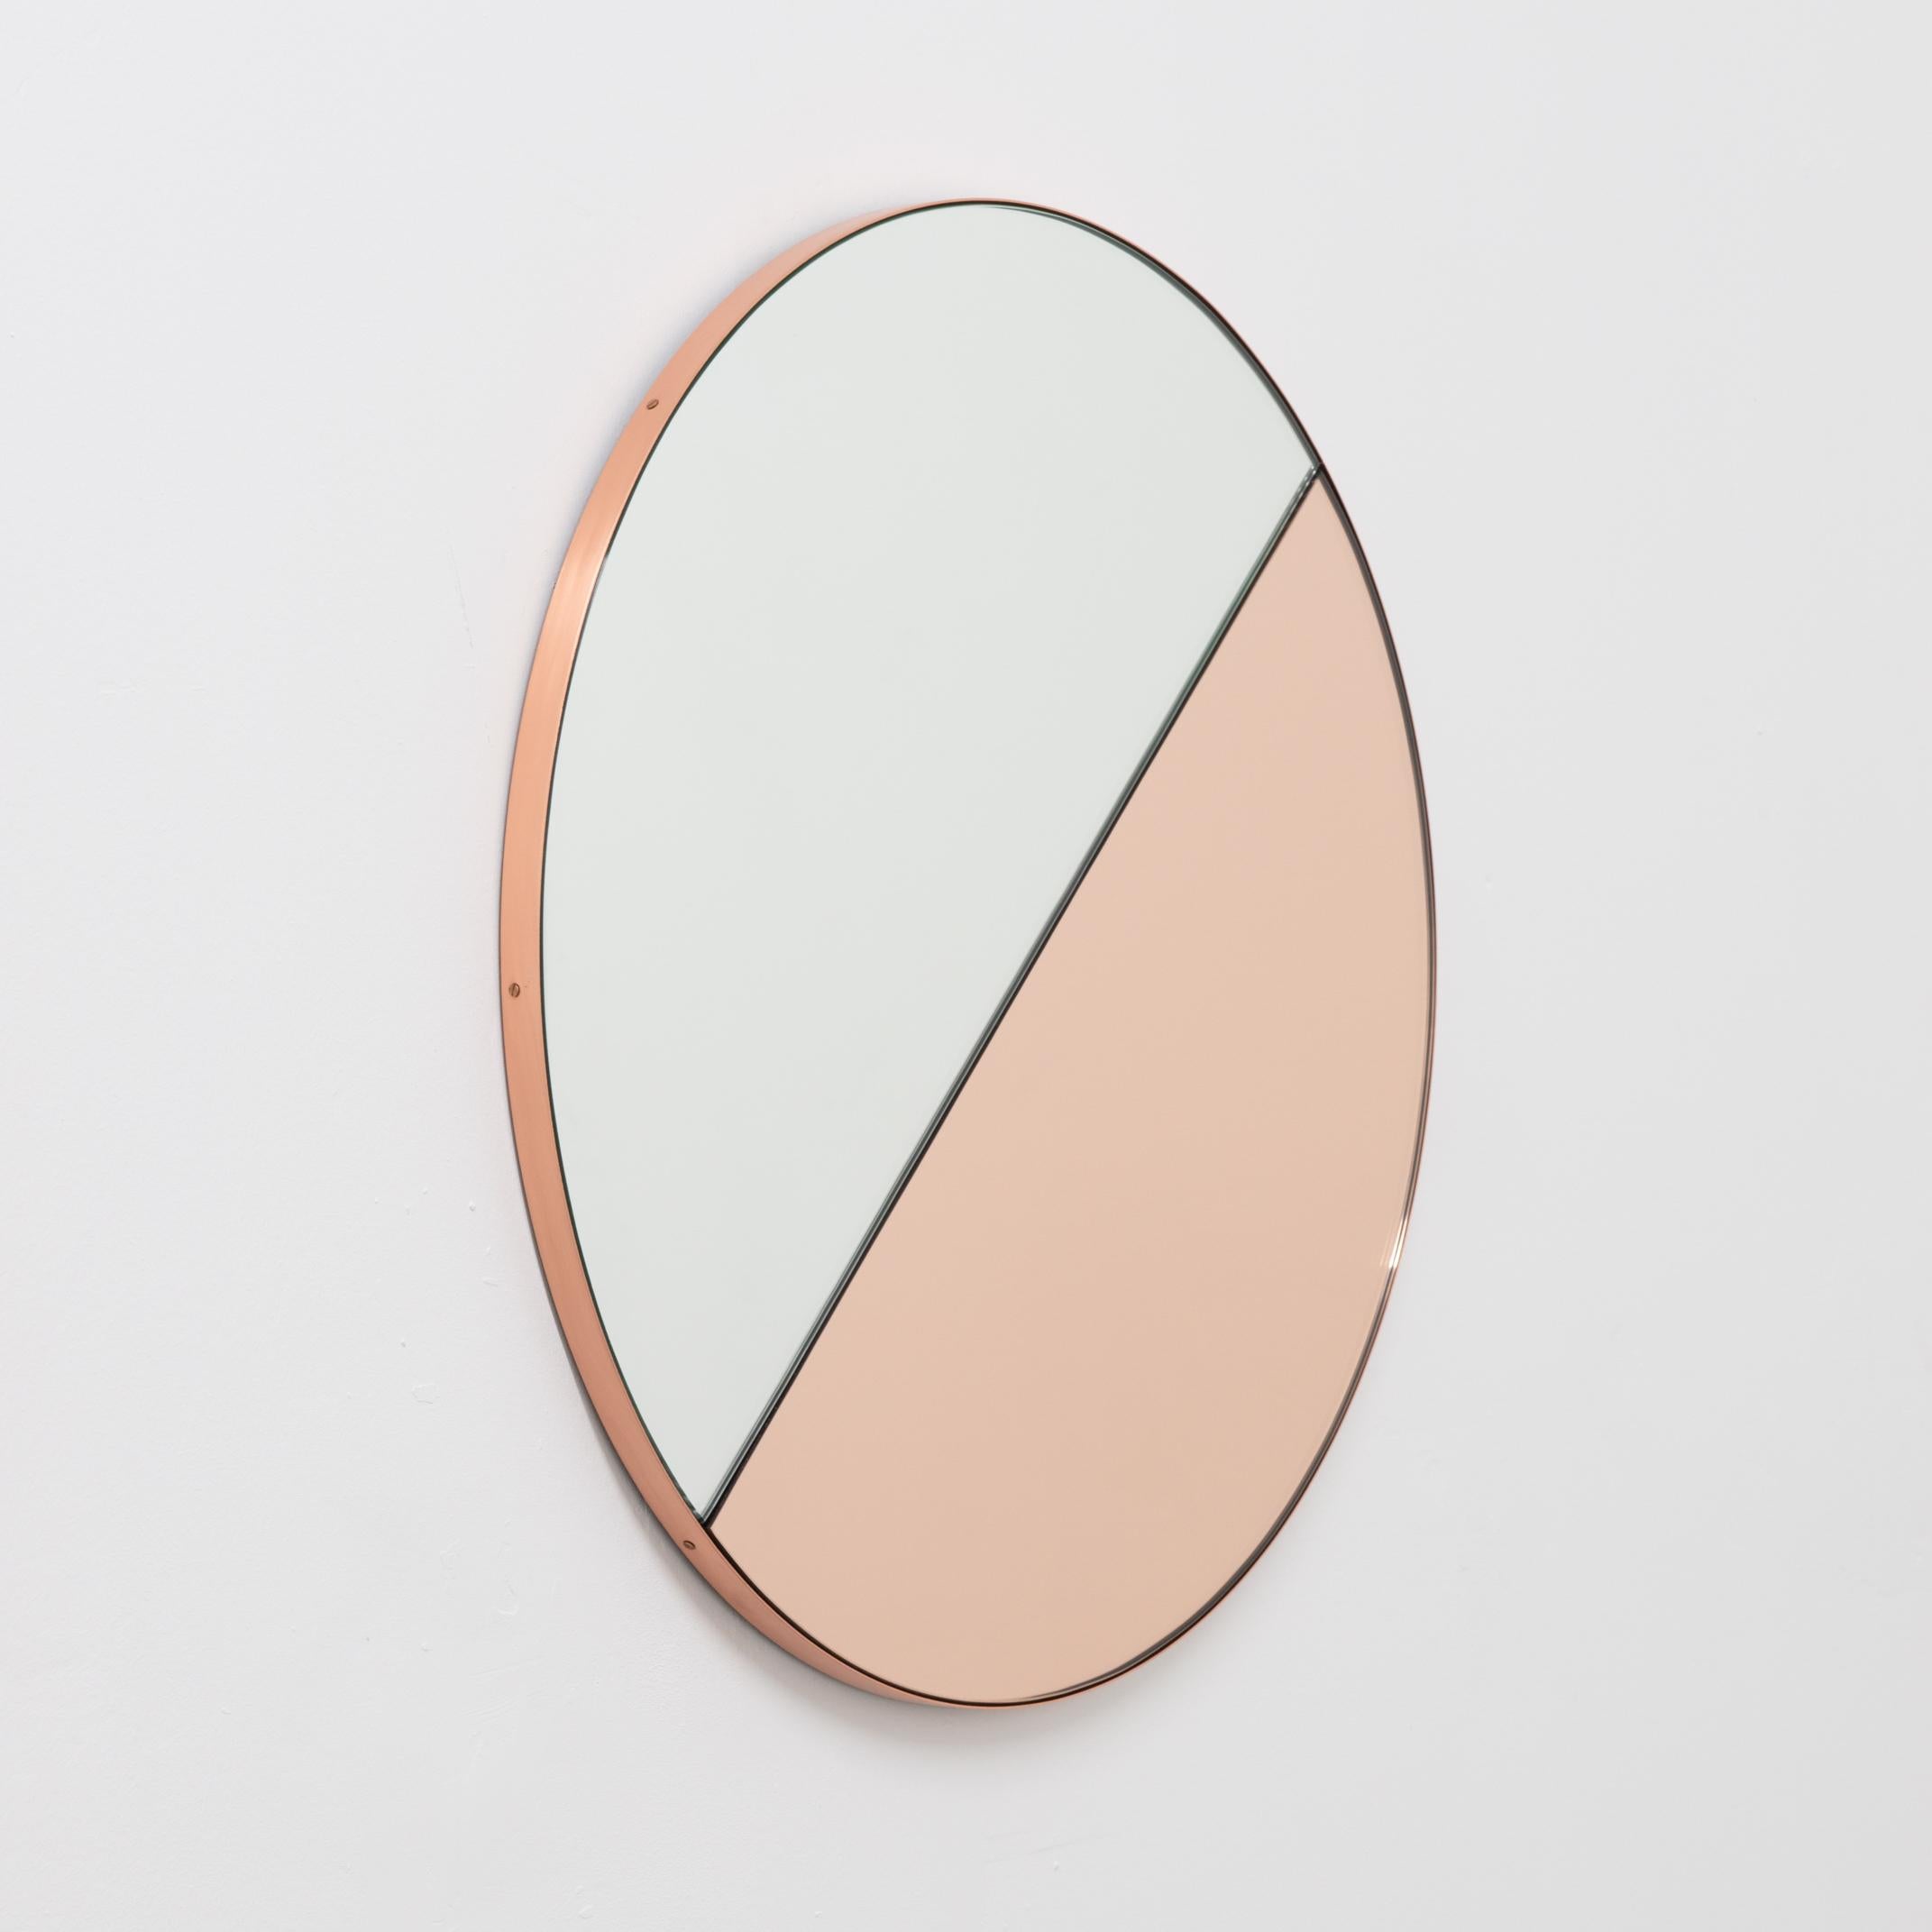 British Orbis Dualis Mixed Rose Gold Tint Round Modern Mirror Copper Frame, XL For Sale